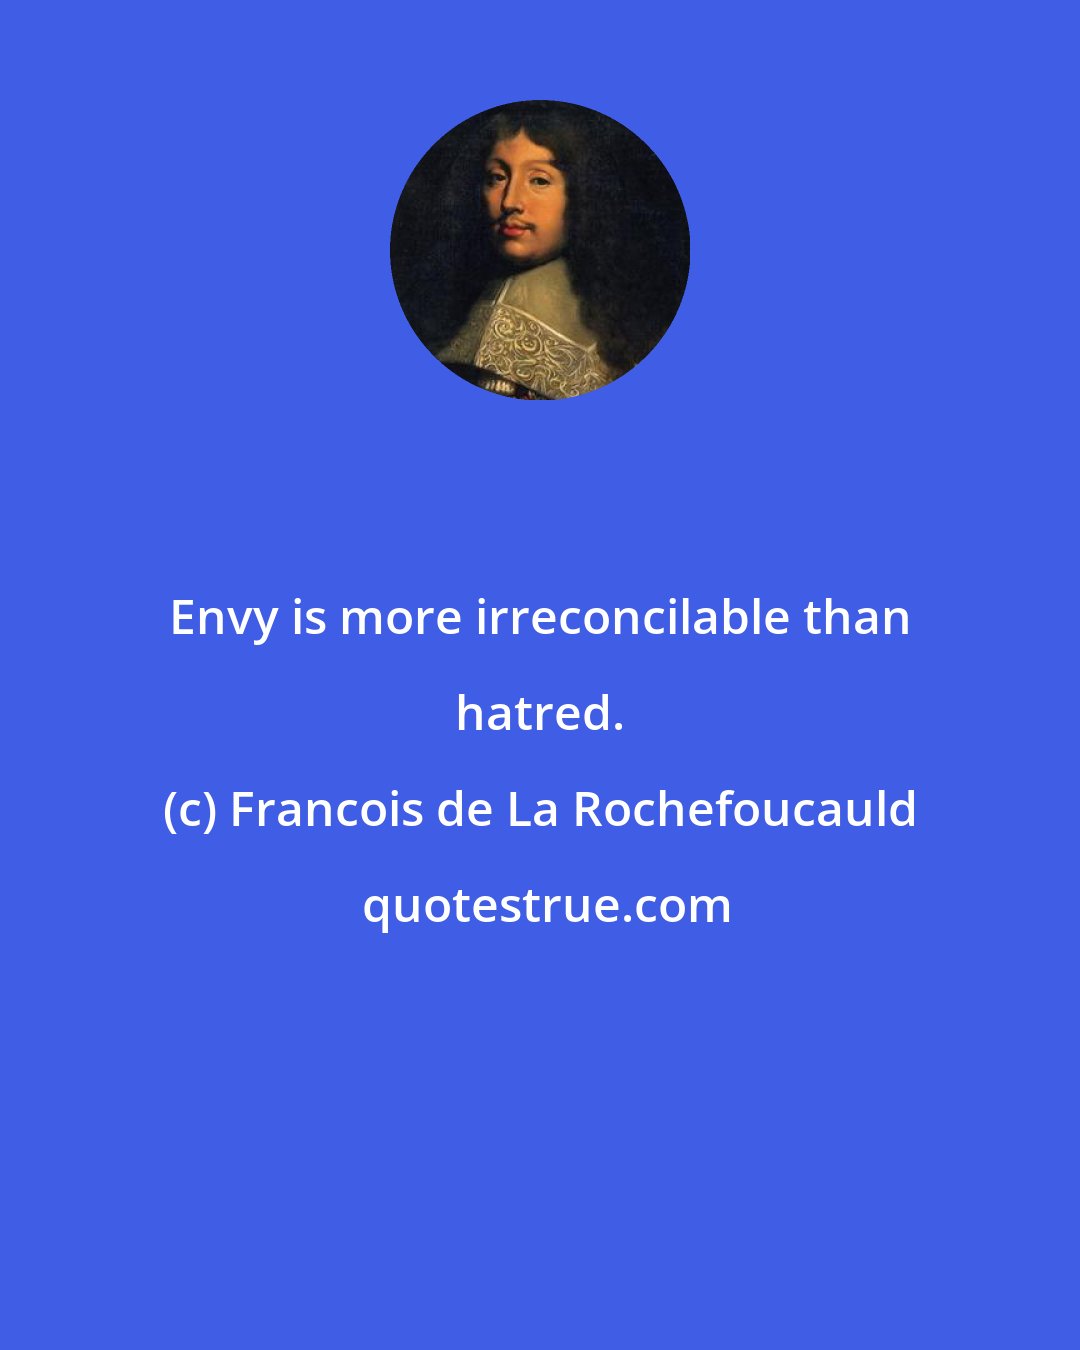 Francois de La Rochefoucauld: Envy is more irreconcilable than hatred.